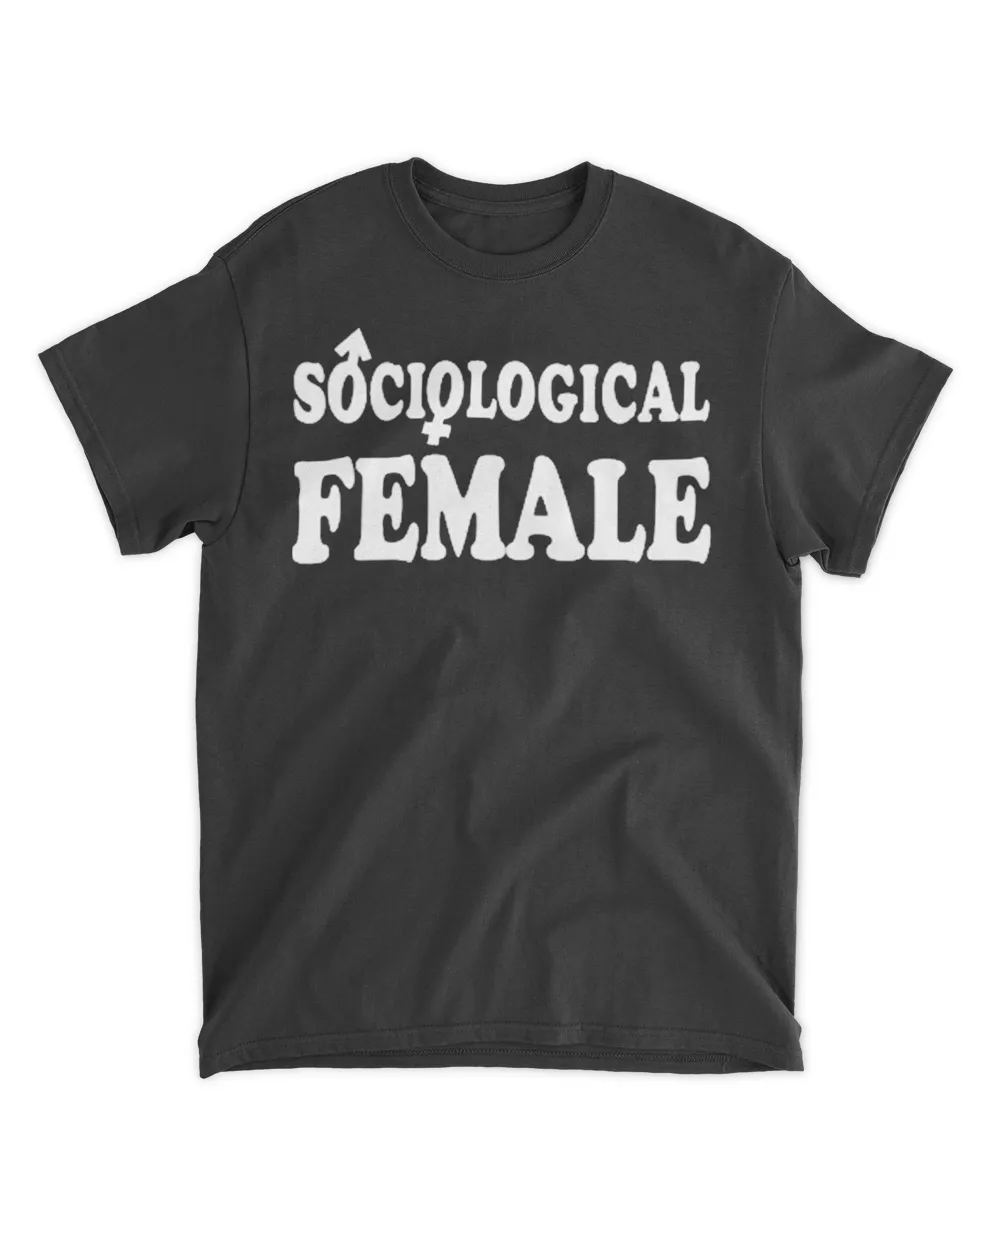 Sociological Female Shirt